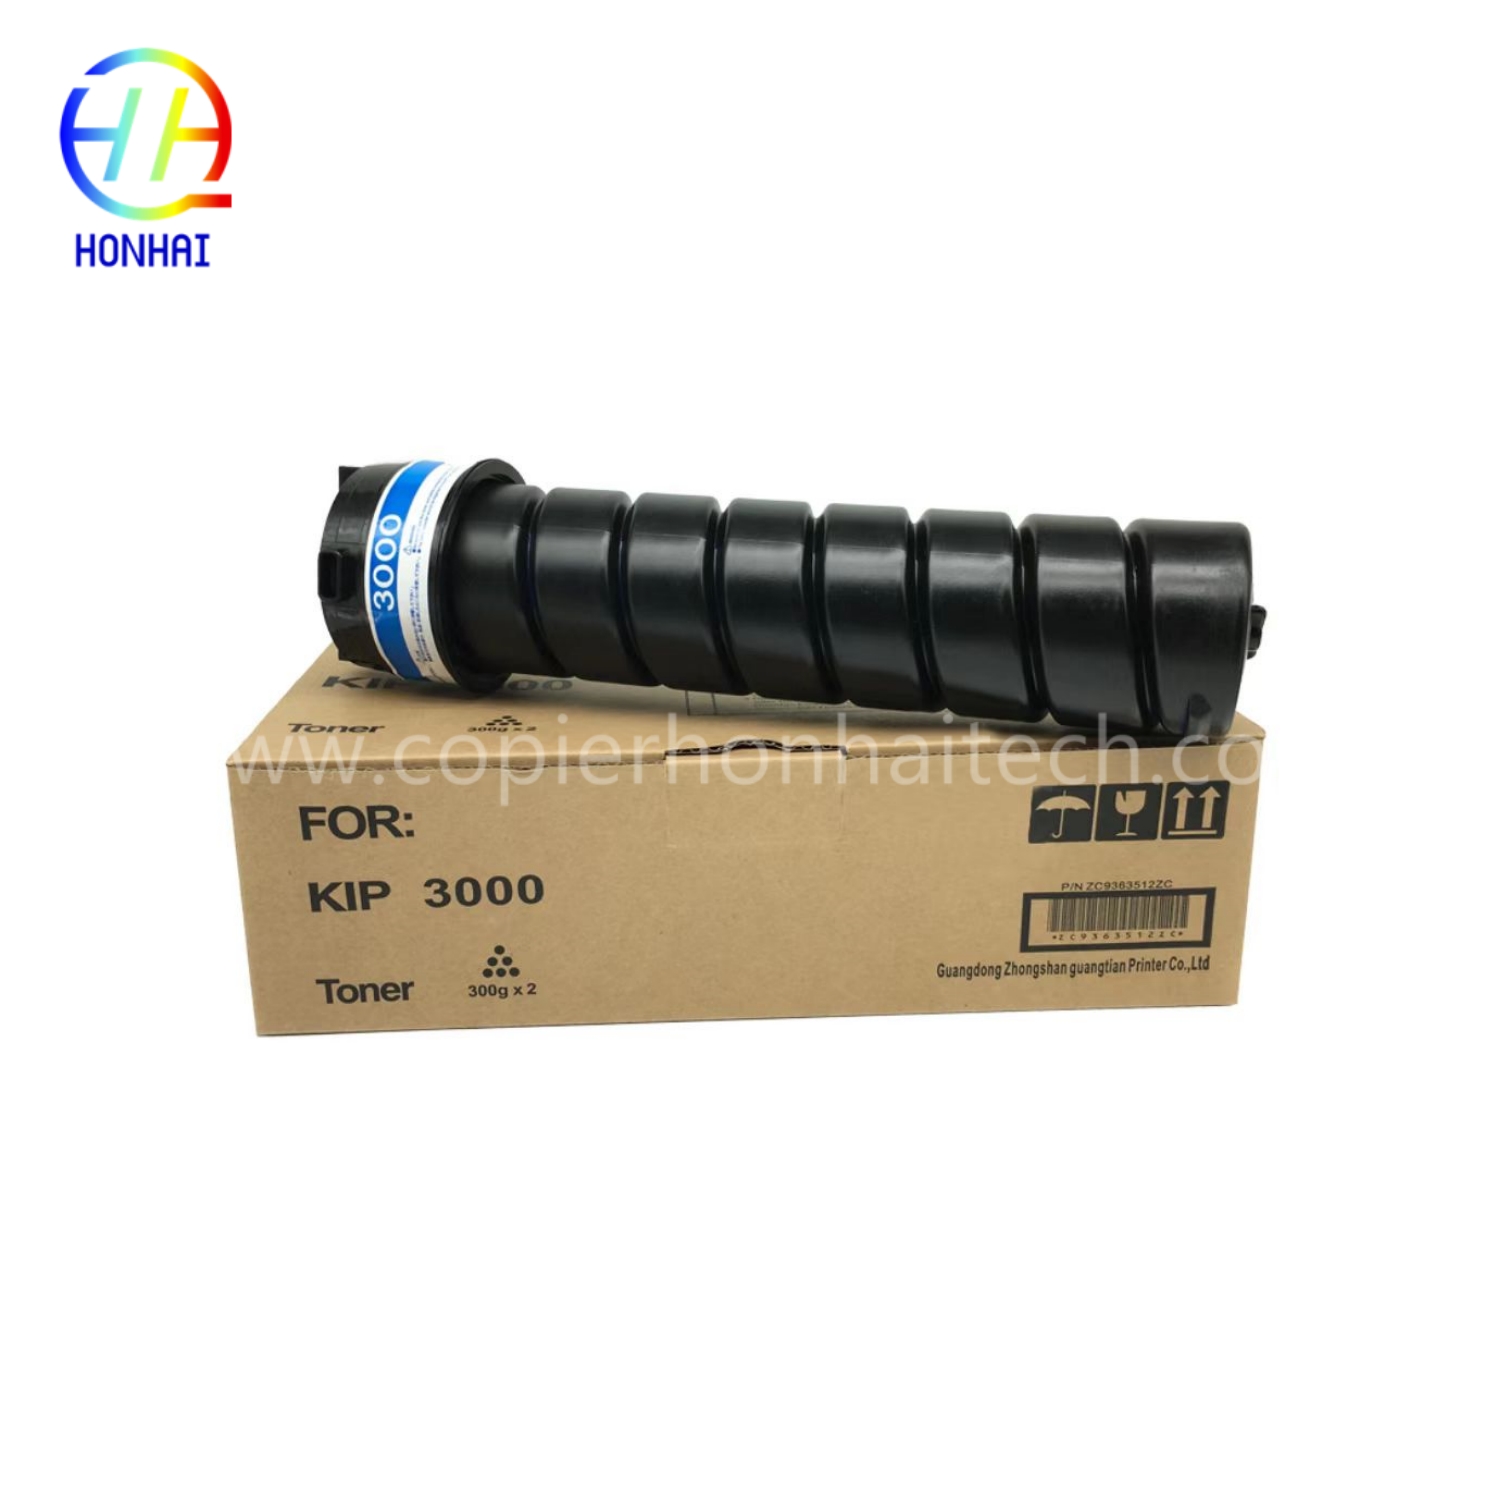 https://www.copierhonhaitech.com/toner-cartridge-for-kip-3000-3100-cyan-black-kip-toner-product/